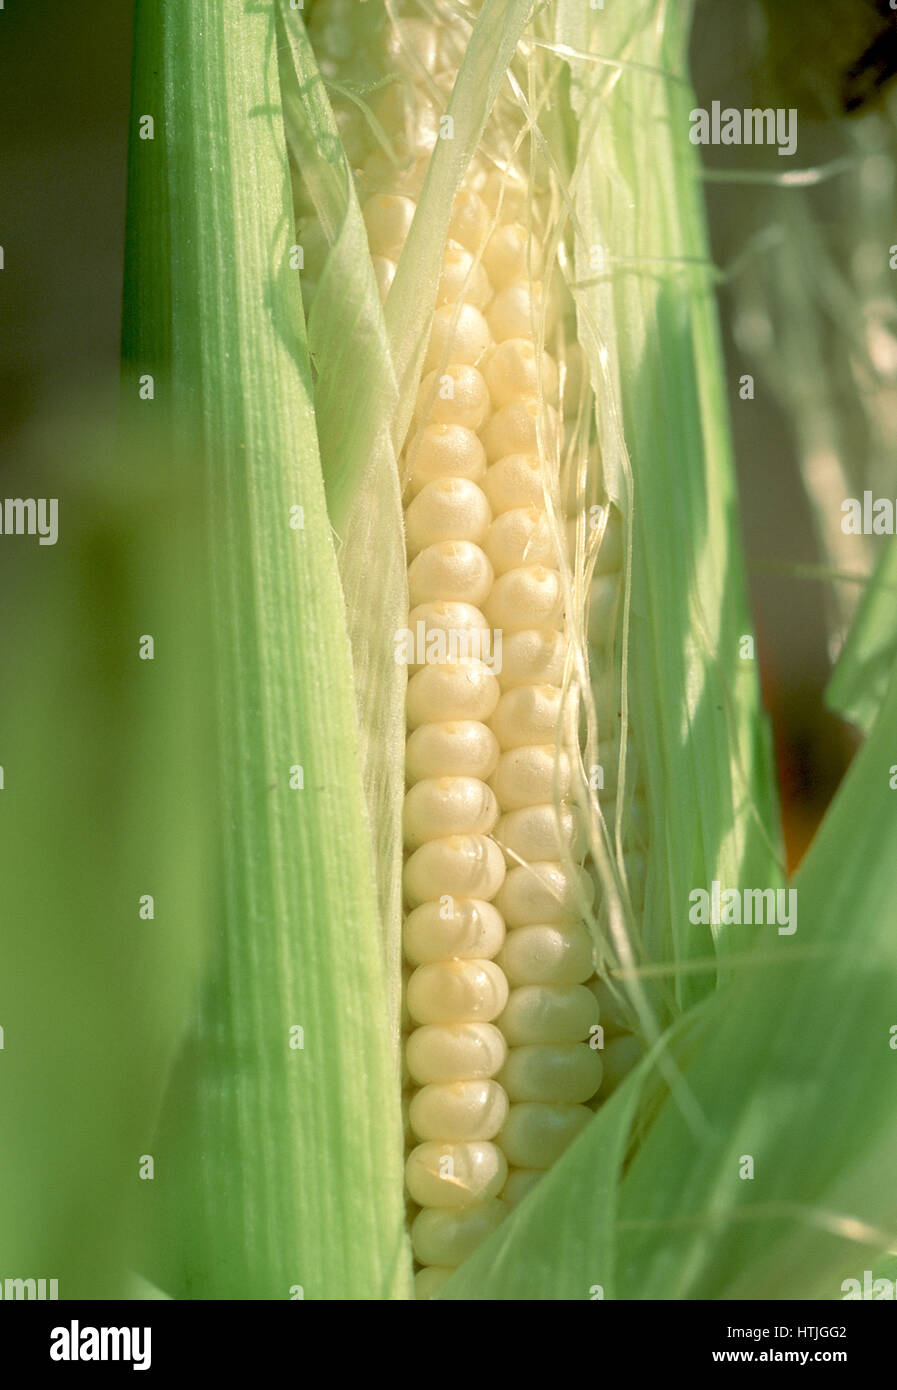 Corn and husk Stock Photo